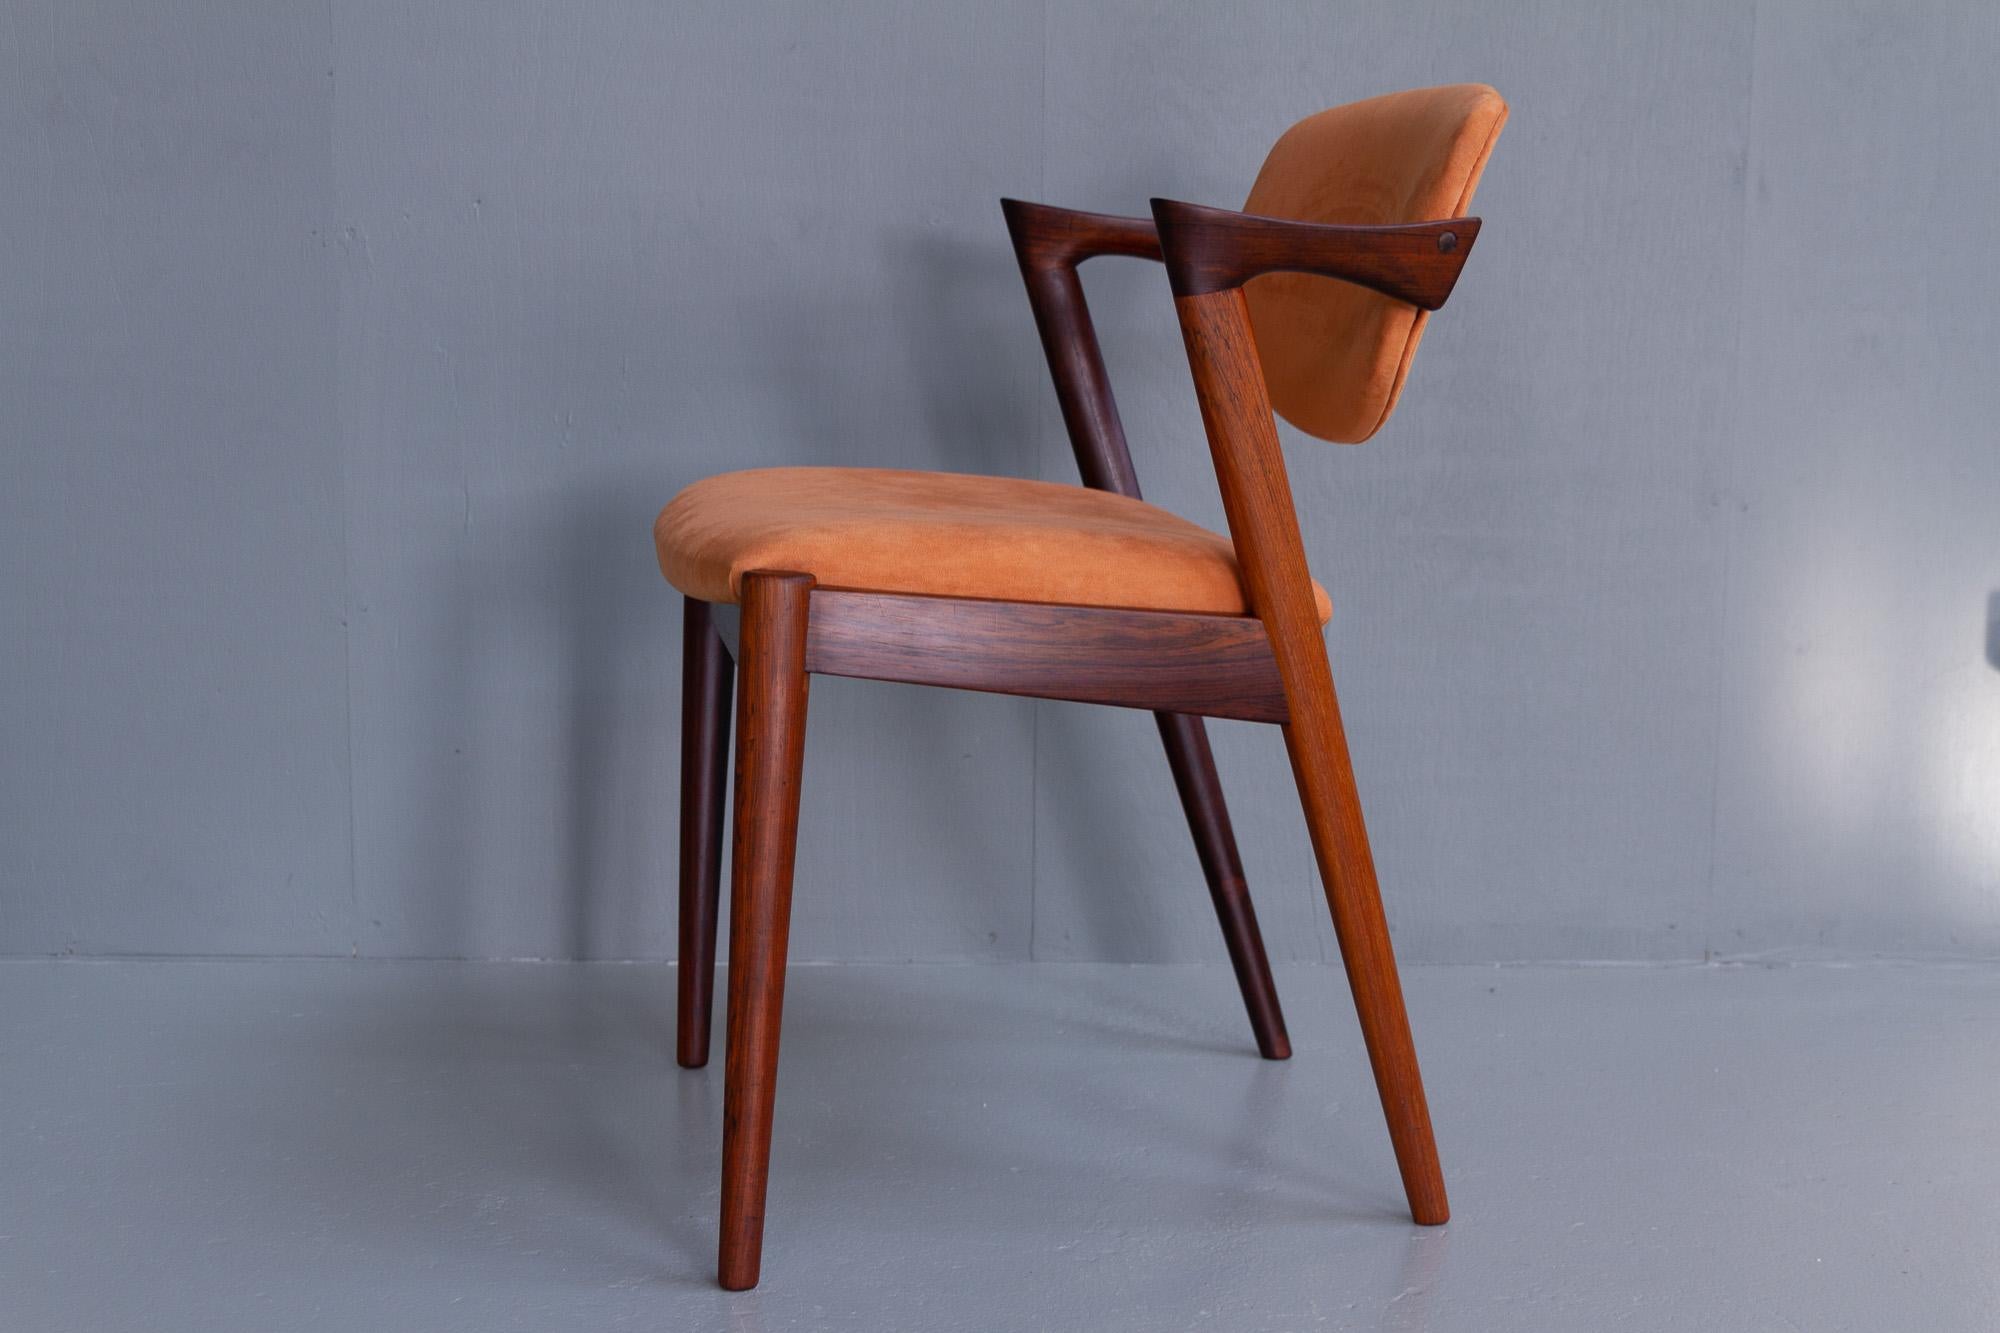 Vintage Danish Modern Rosewood Chair Model 42 by Kai Kristiansen, 1960s For Sale 2